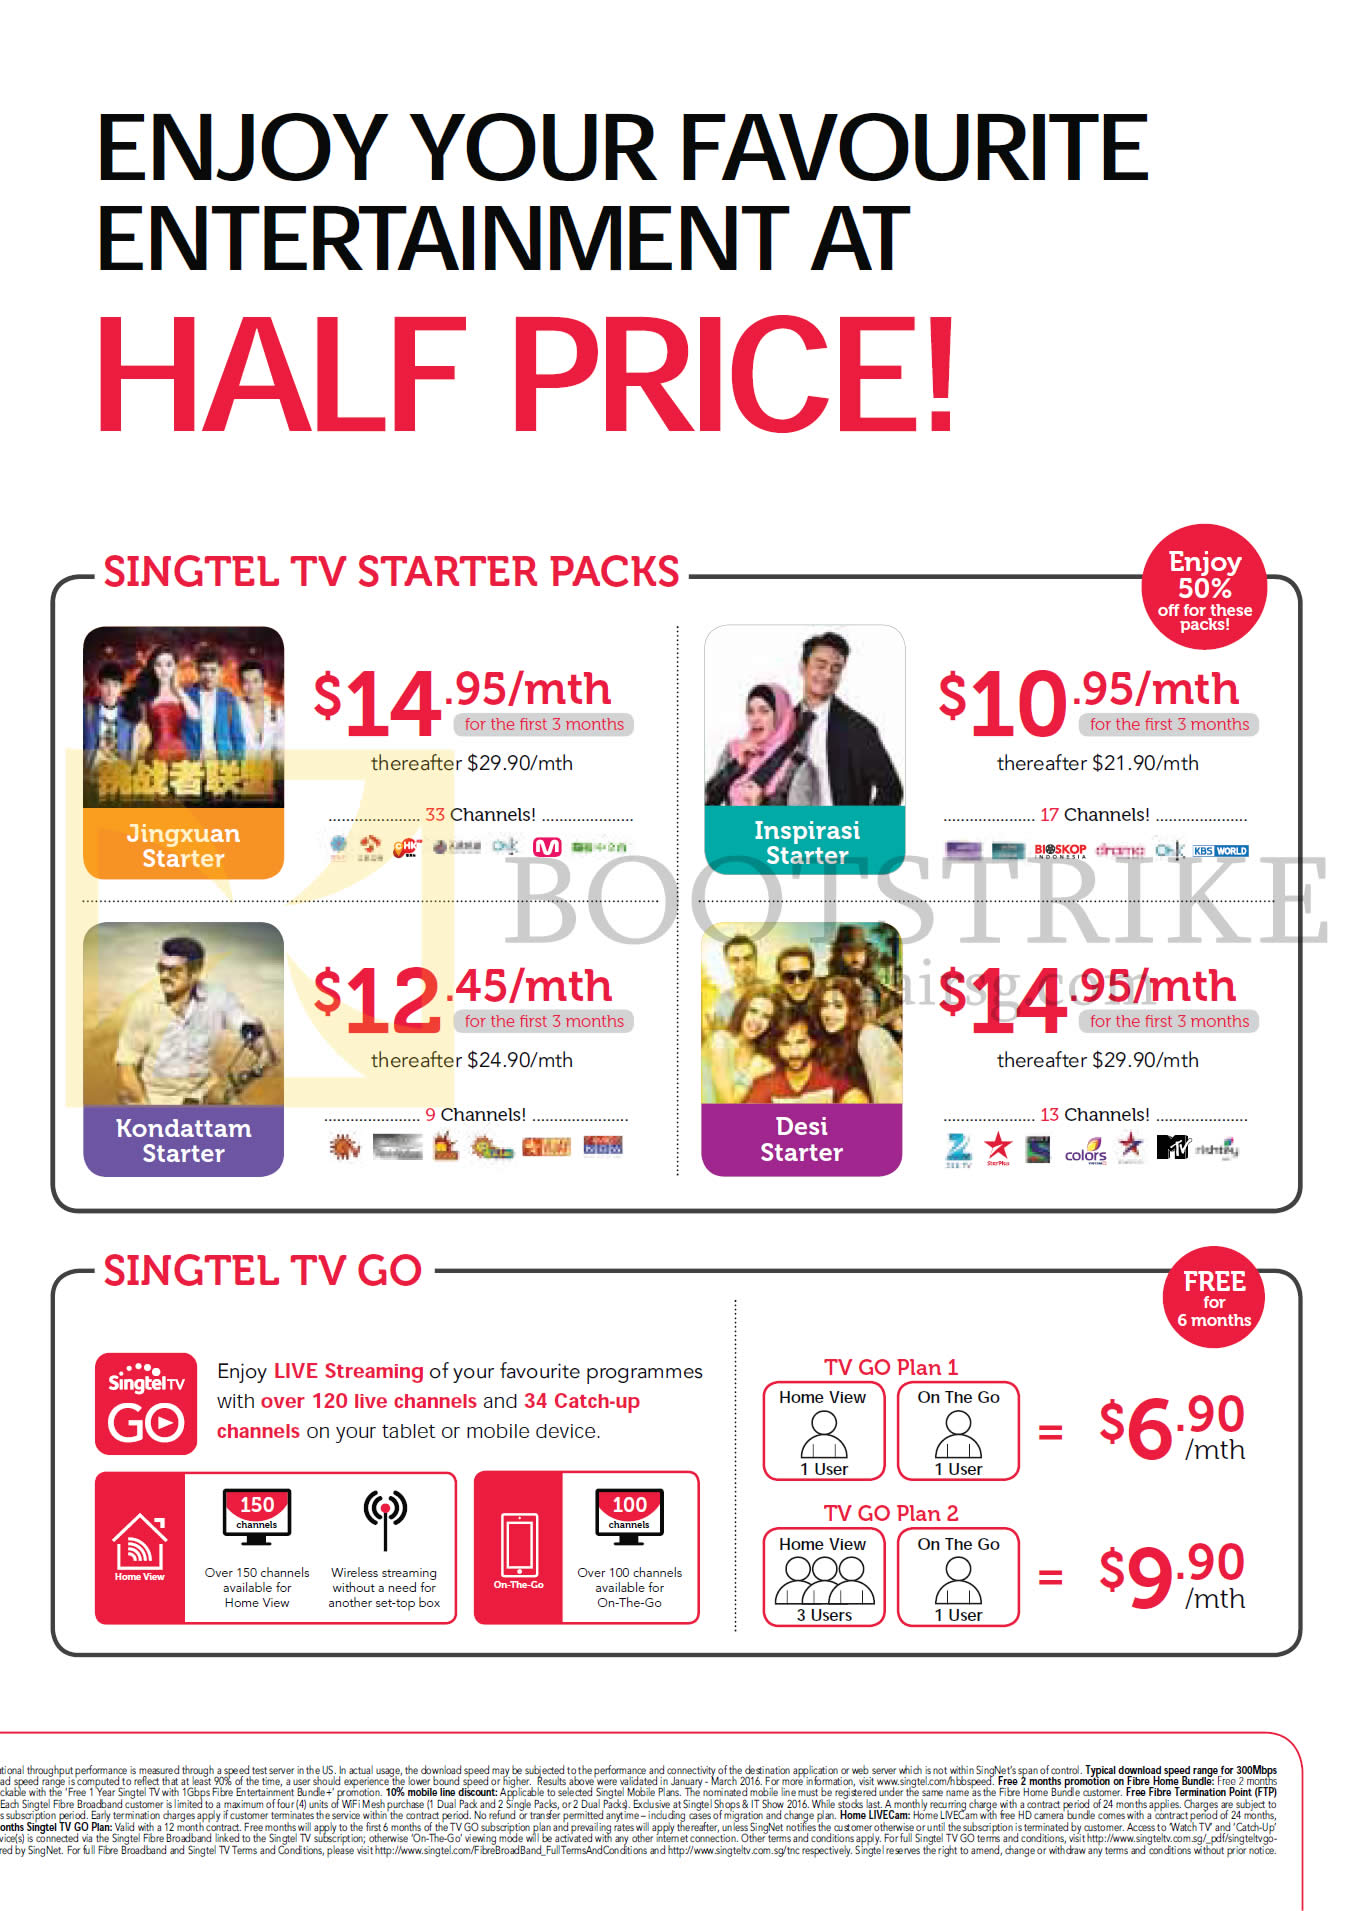 PC SHOW 2016 price list image brochure of Singtel TV Starter Packs, TV GO, Jingxuan Starter, Kondattam Starter, Inspirasi Starter, Desi Starter, TV GO Plan 1, 2